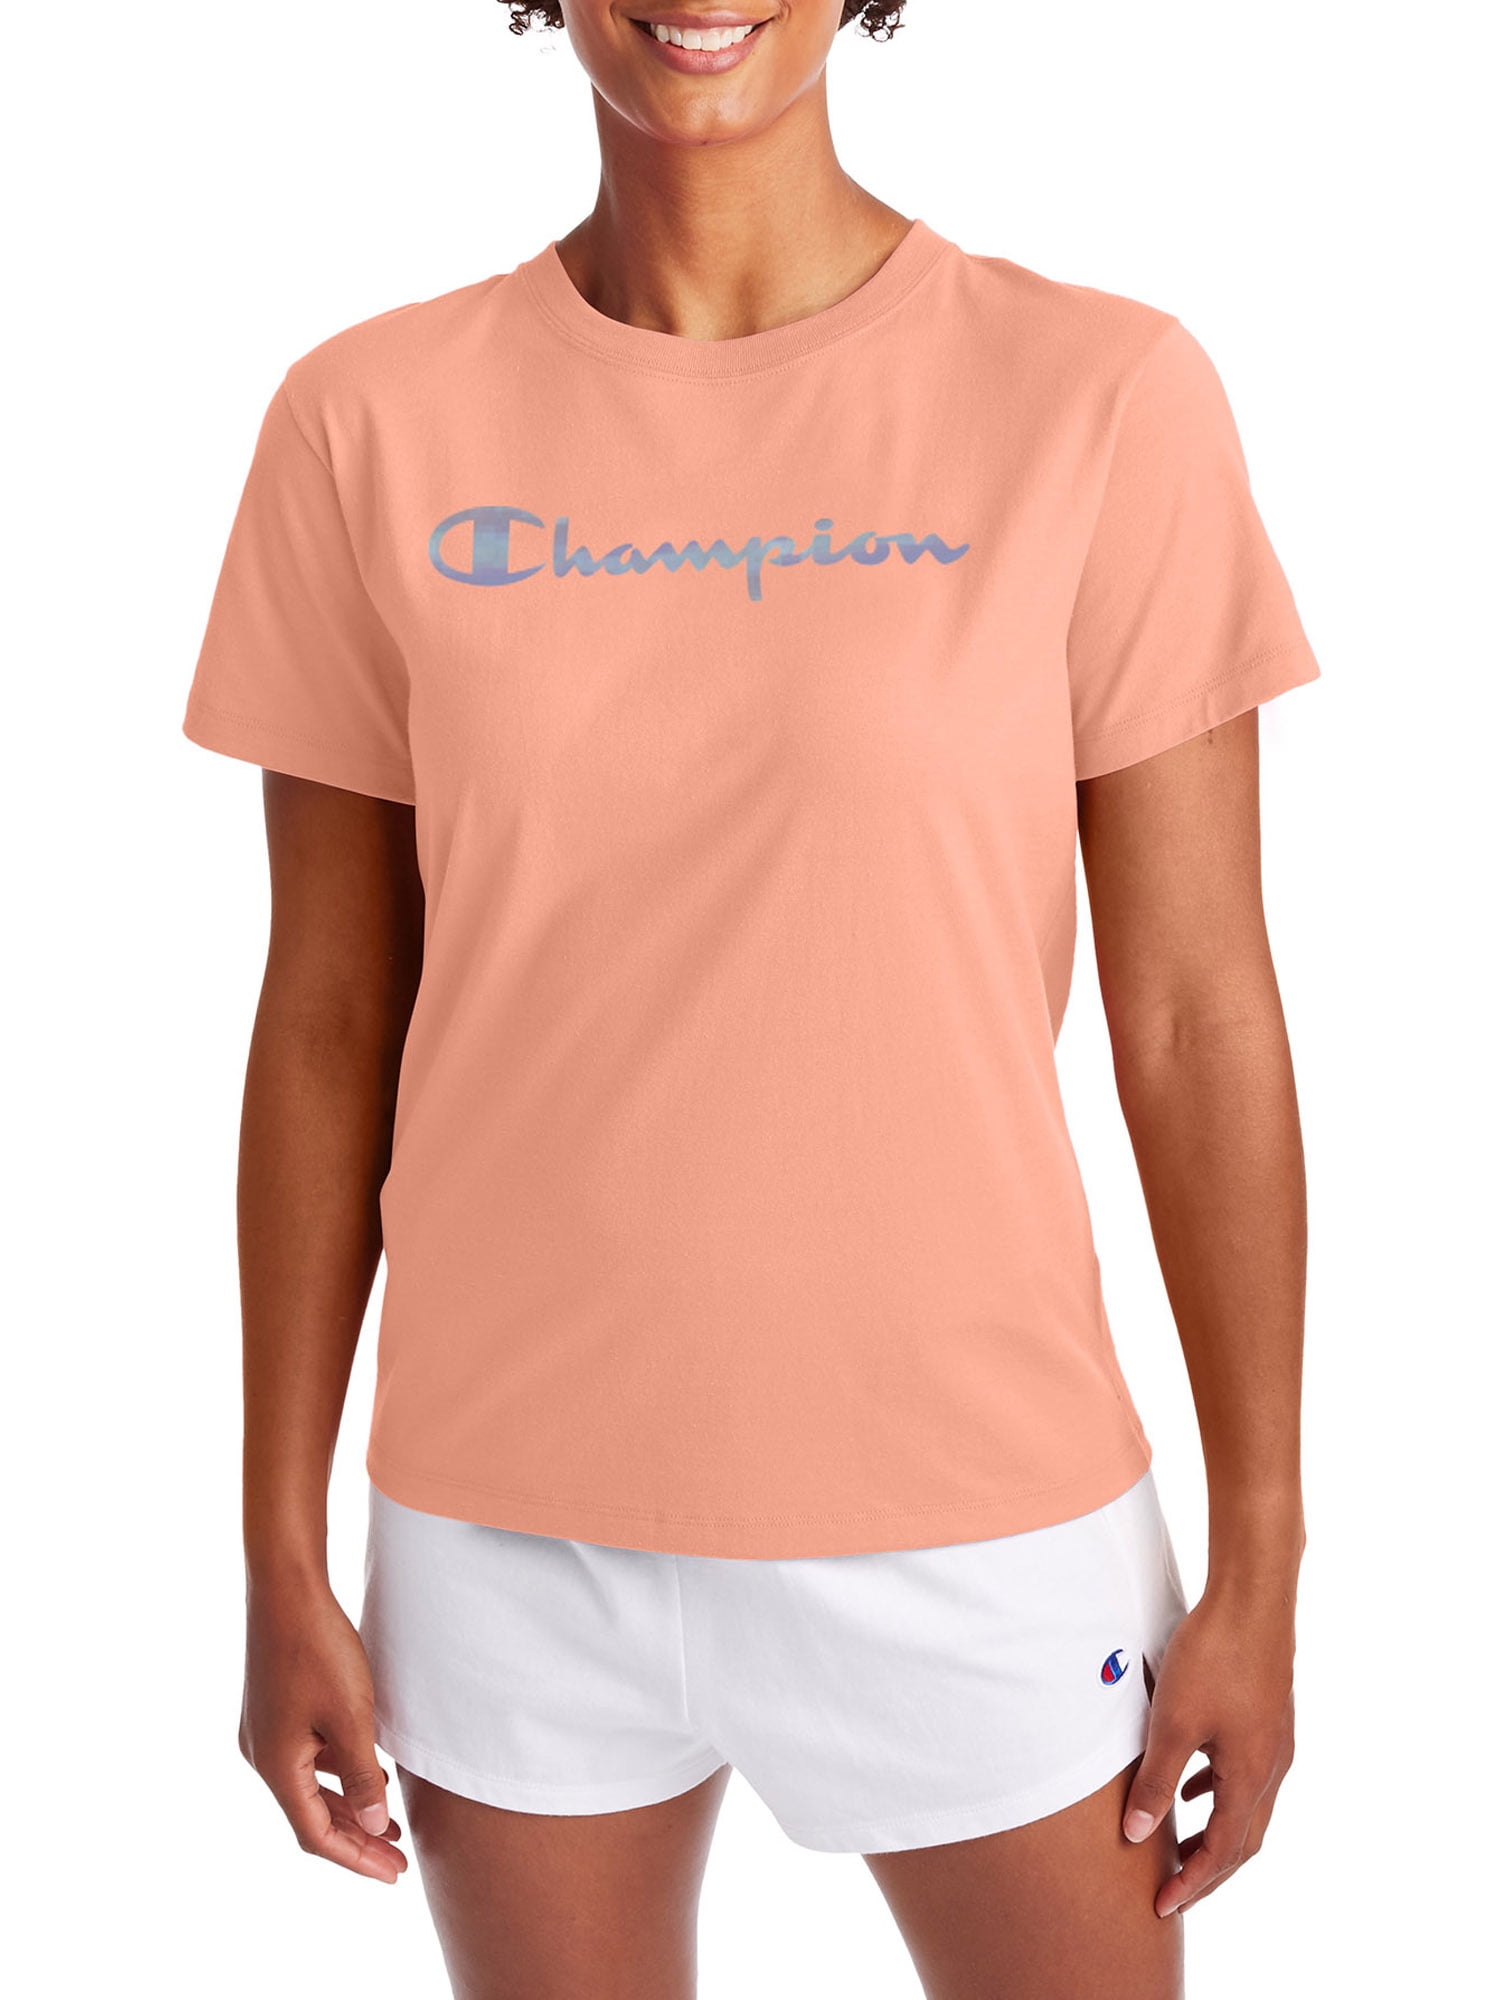 Champion Classic Fit Short Sleeve T-Shirt (Women's) 1 Pack - Walmart.com